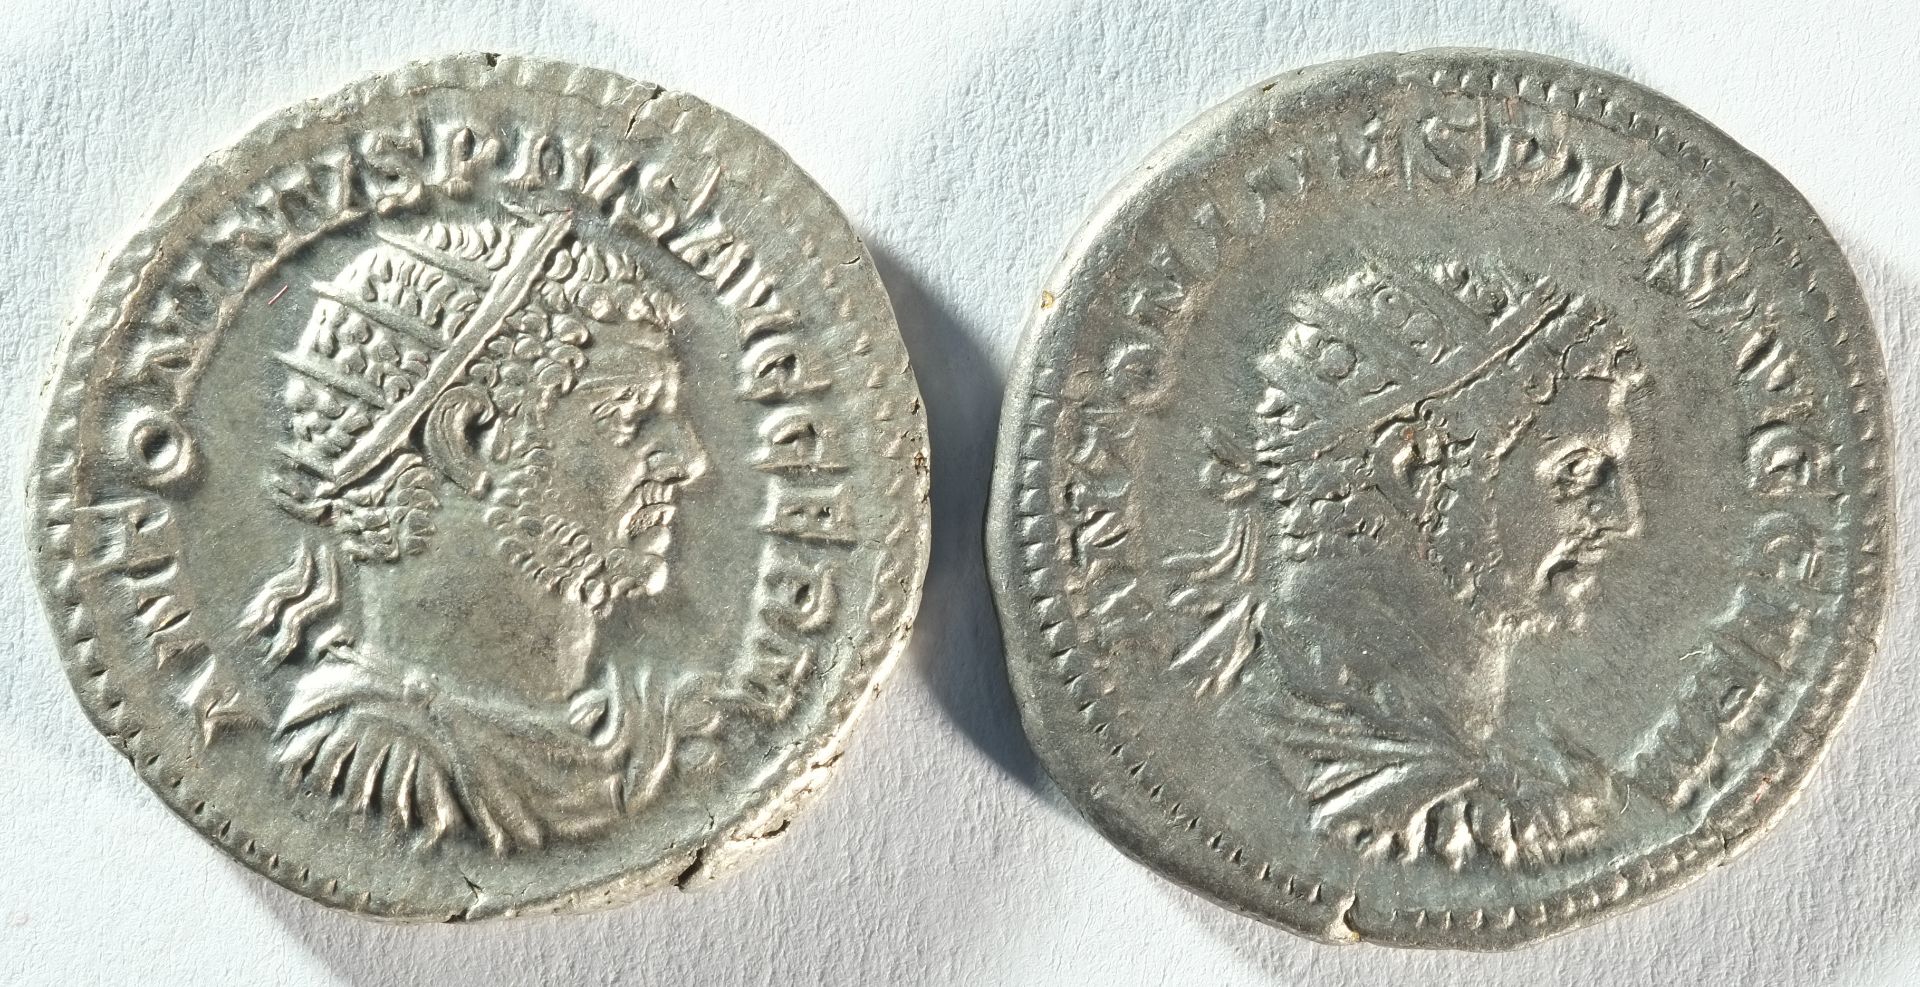 2x Caracalla (198 - 217 CE) silver antoninianii